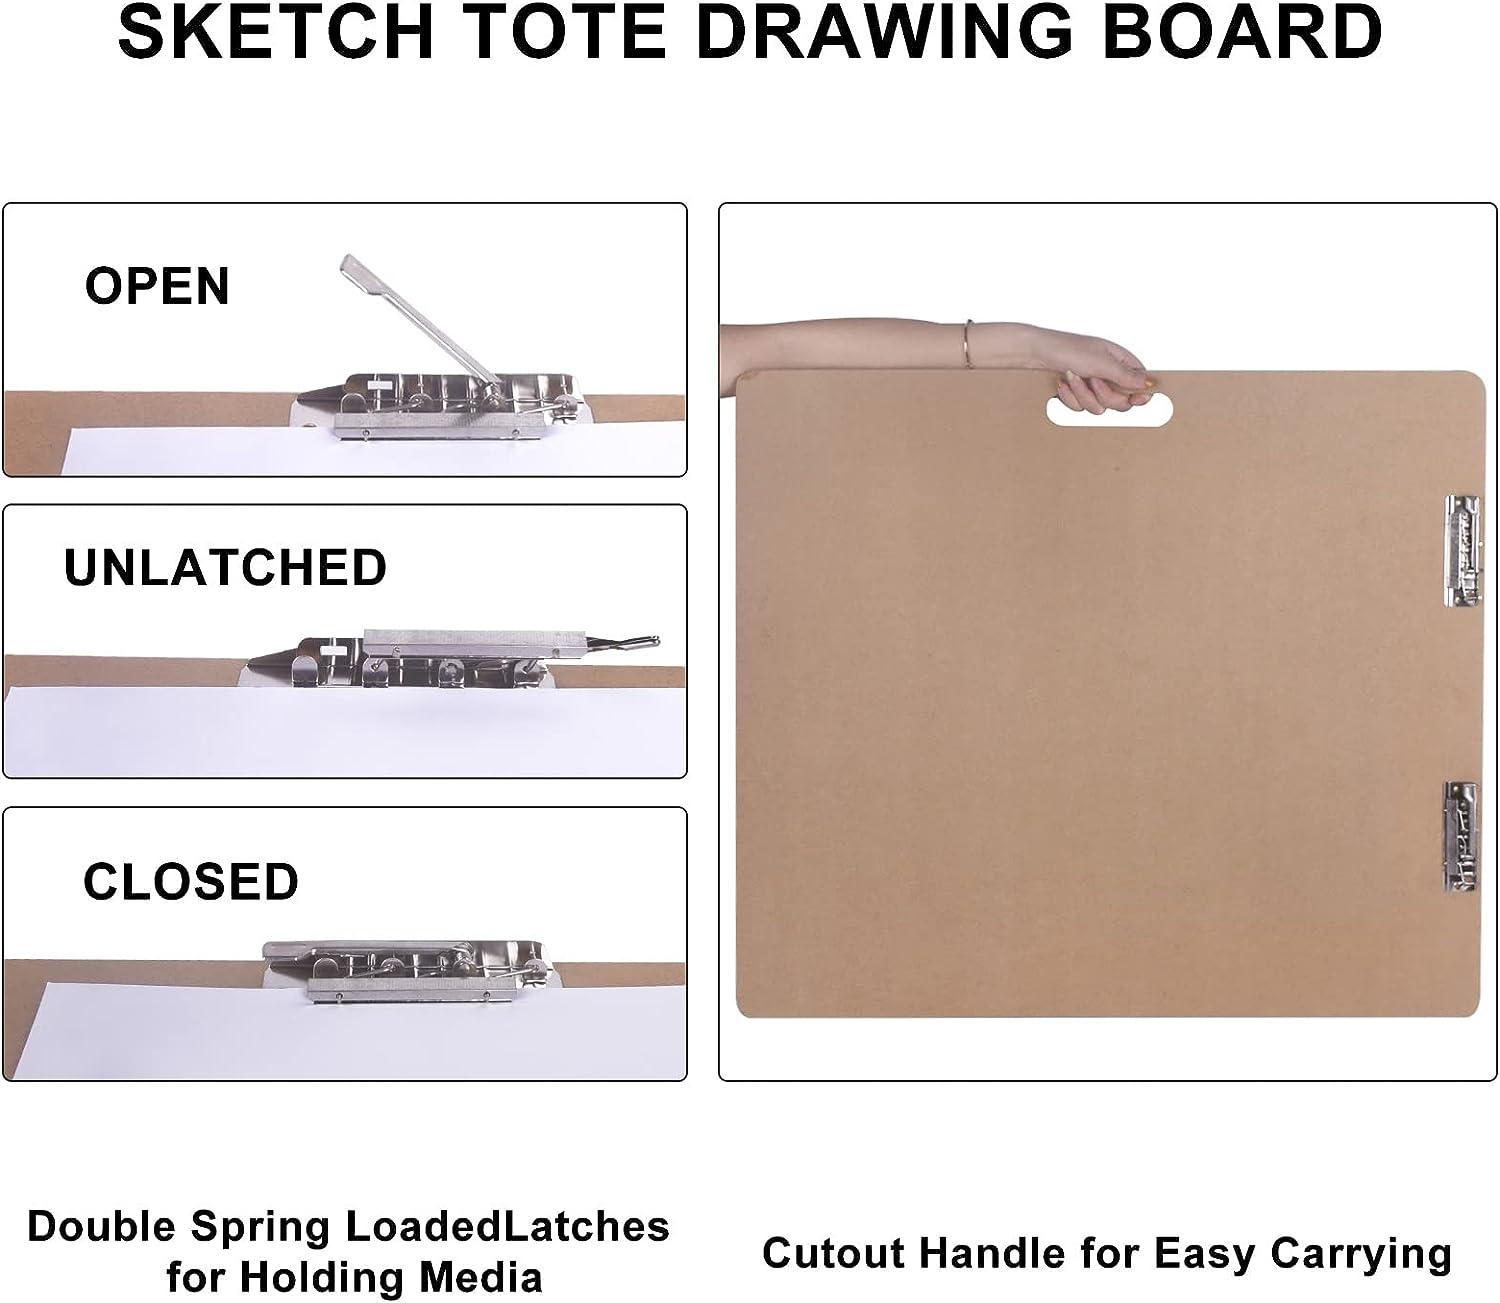 Art Advantage Artist Sketch Tote Board 26 x 38 with handle